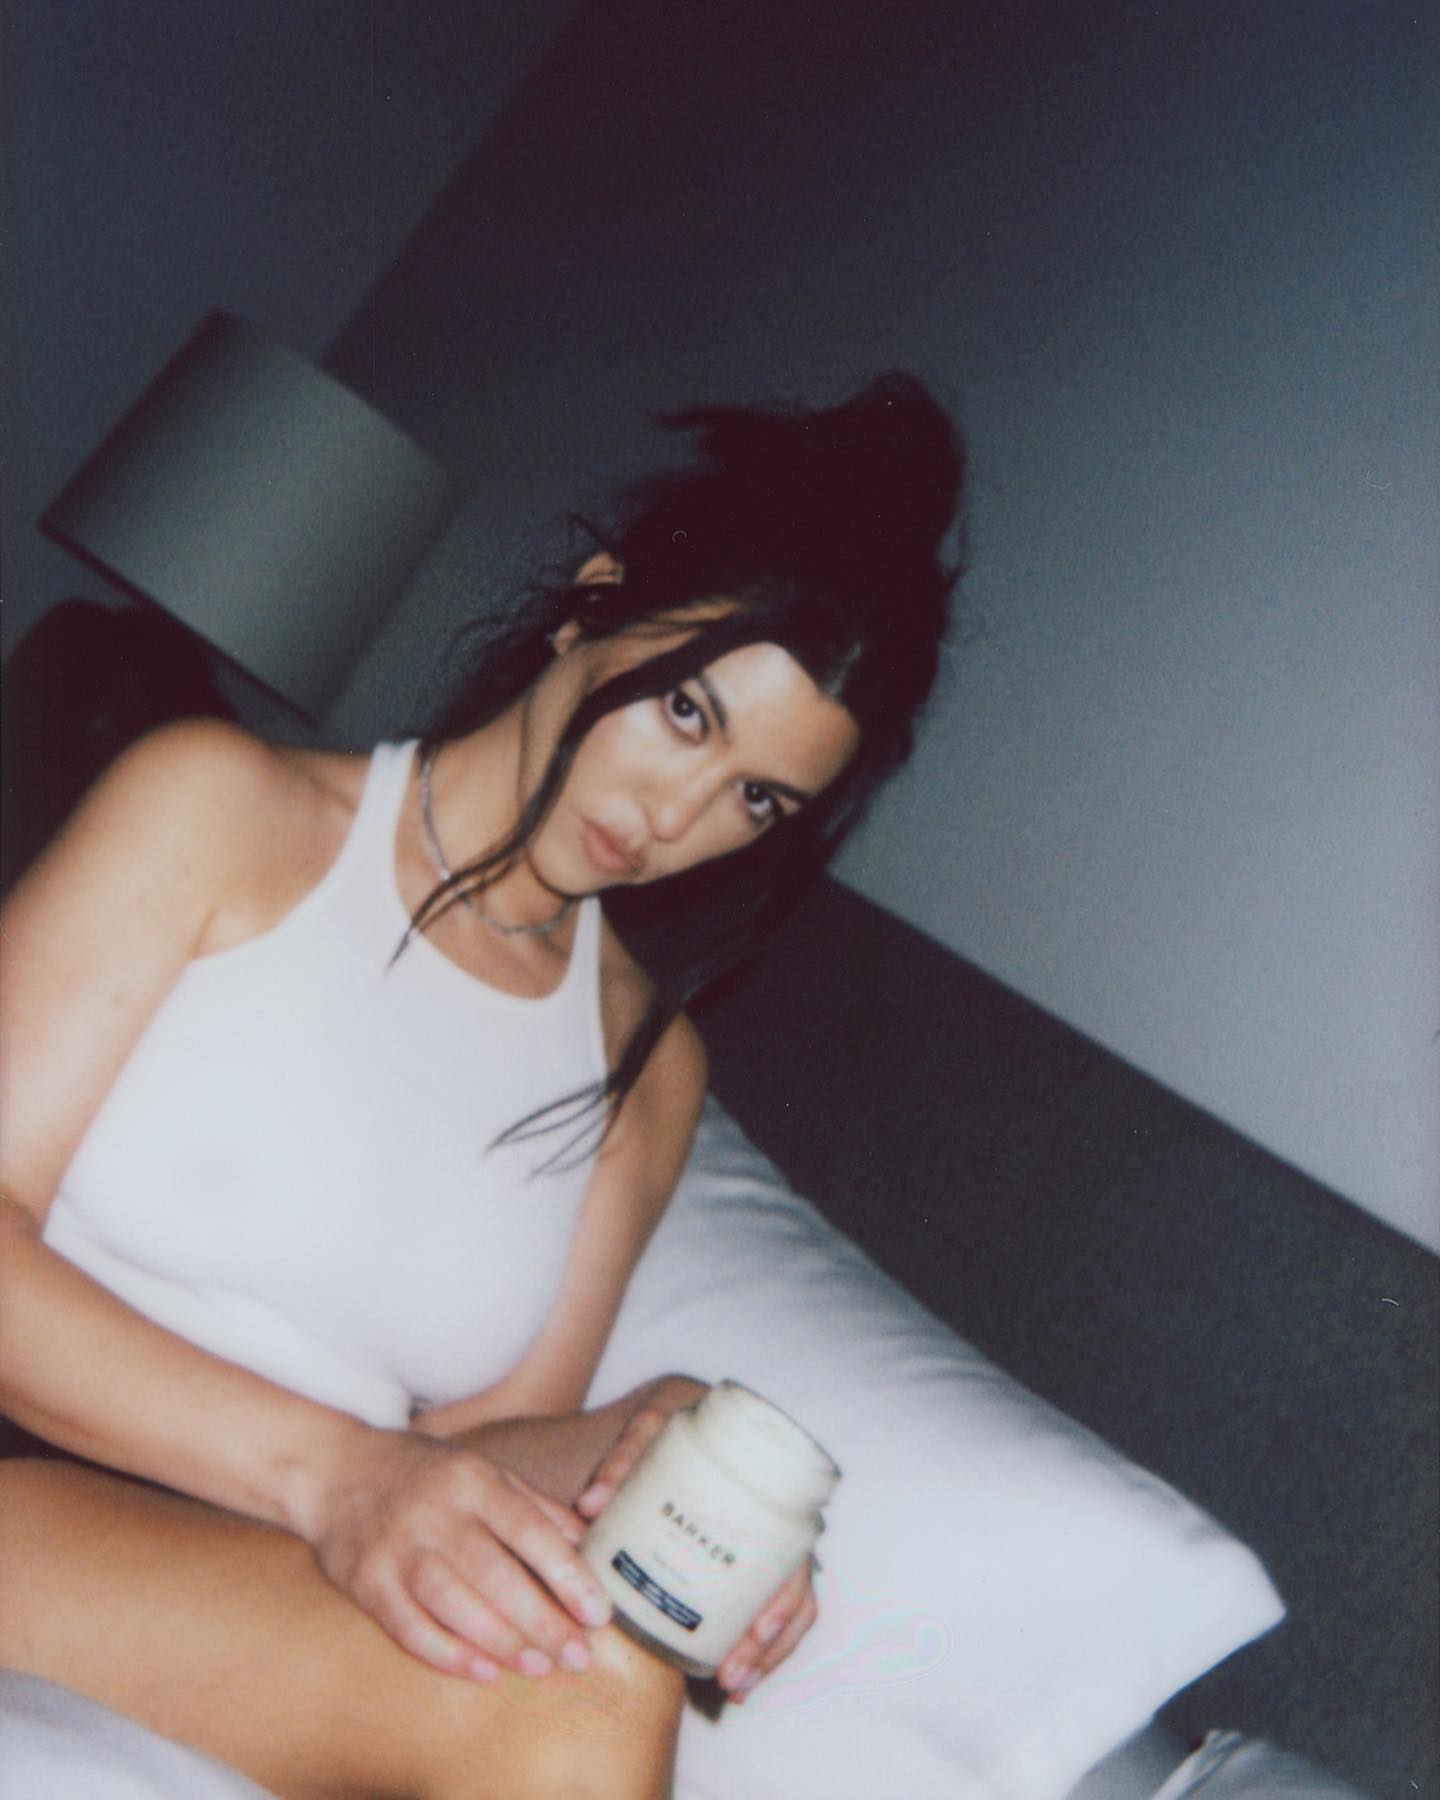 Fotos n°1 : Llvate a Kourtney Kardashian al bao contigo!